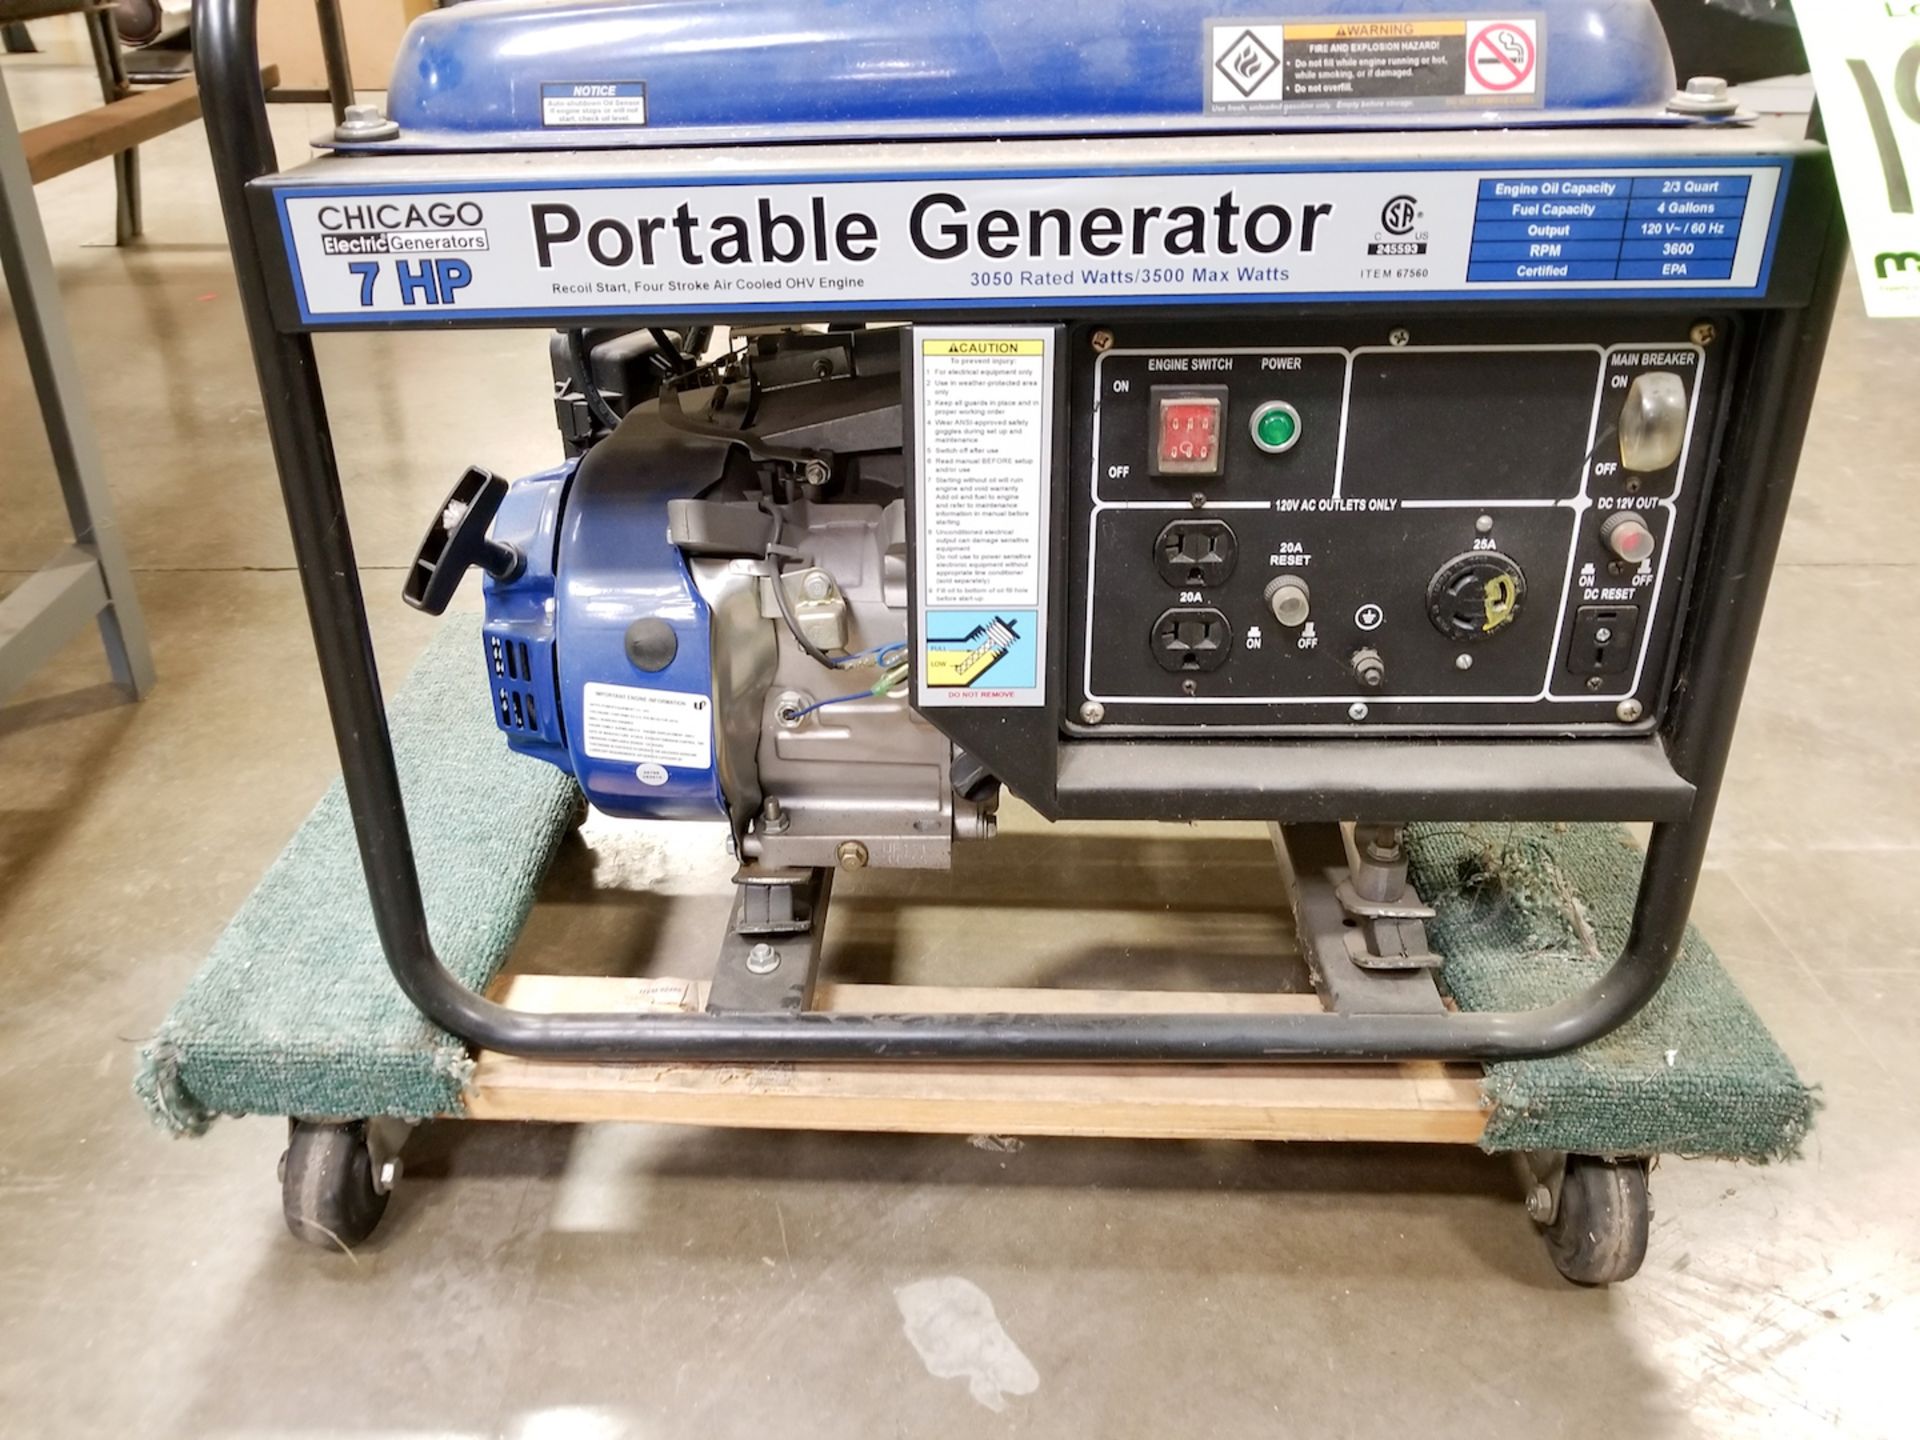 Chicago Portable Generator 7HP, 3500 Max Watts - Image 2 of 2